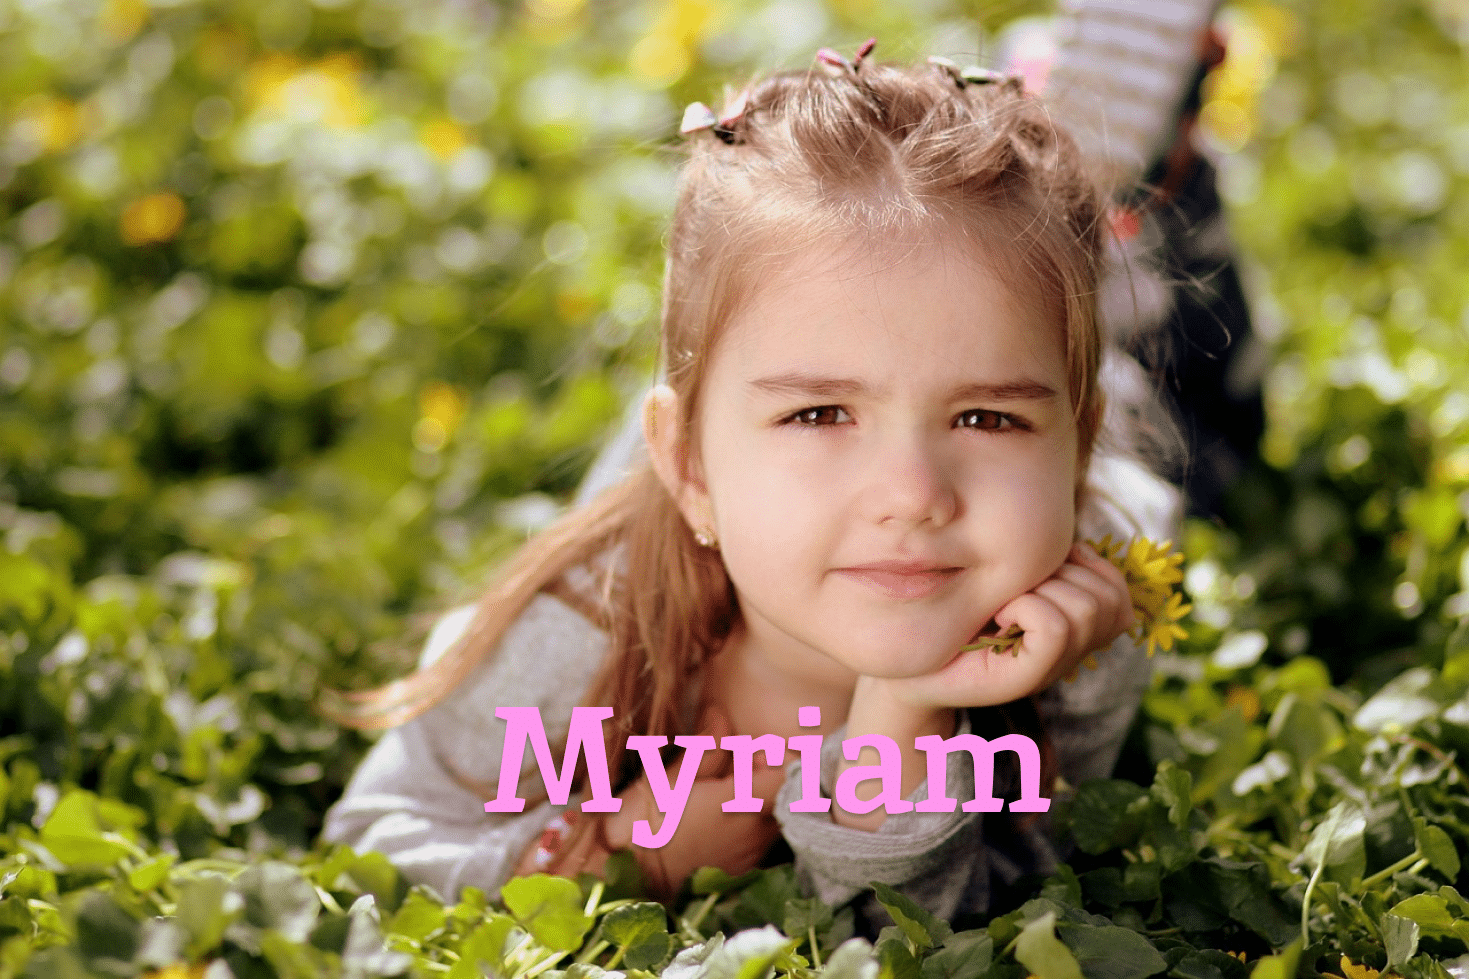 signification prenom myriam